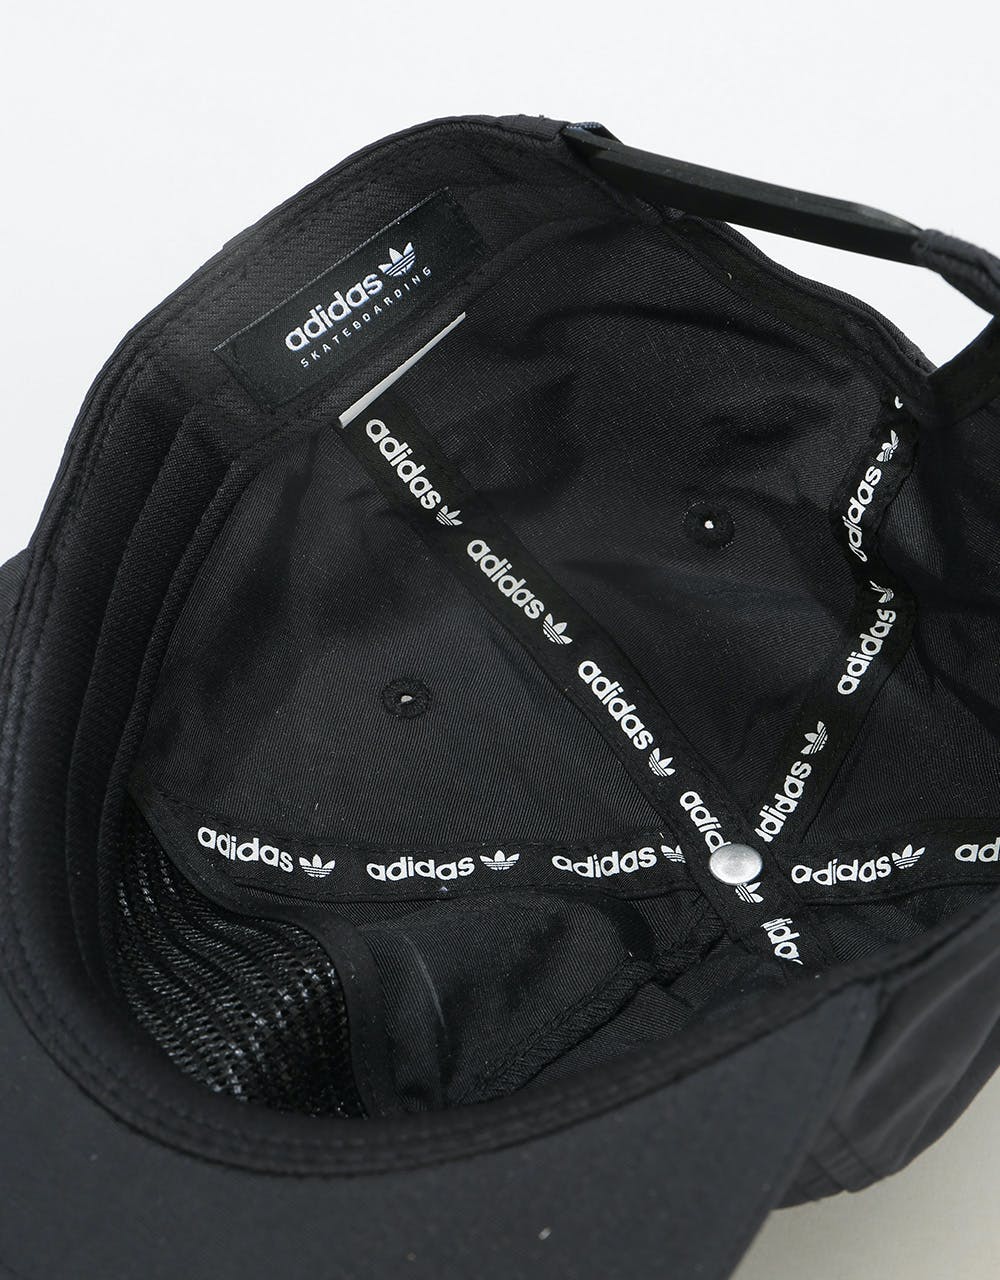 Adidas Iaia Snapback Cap - Black